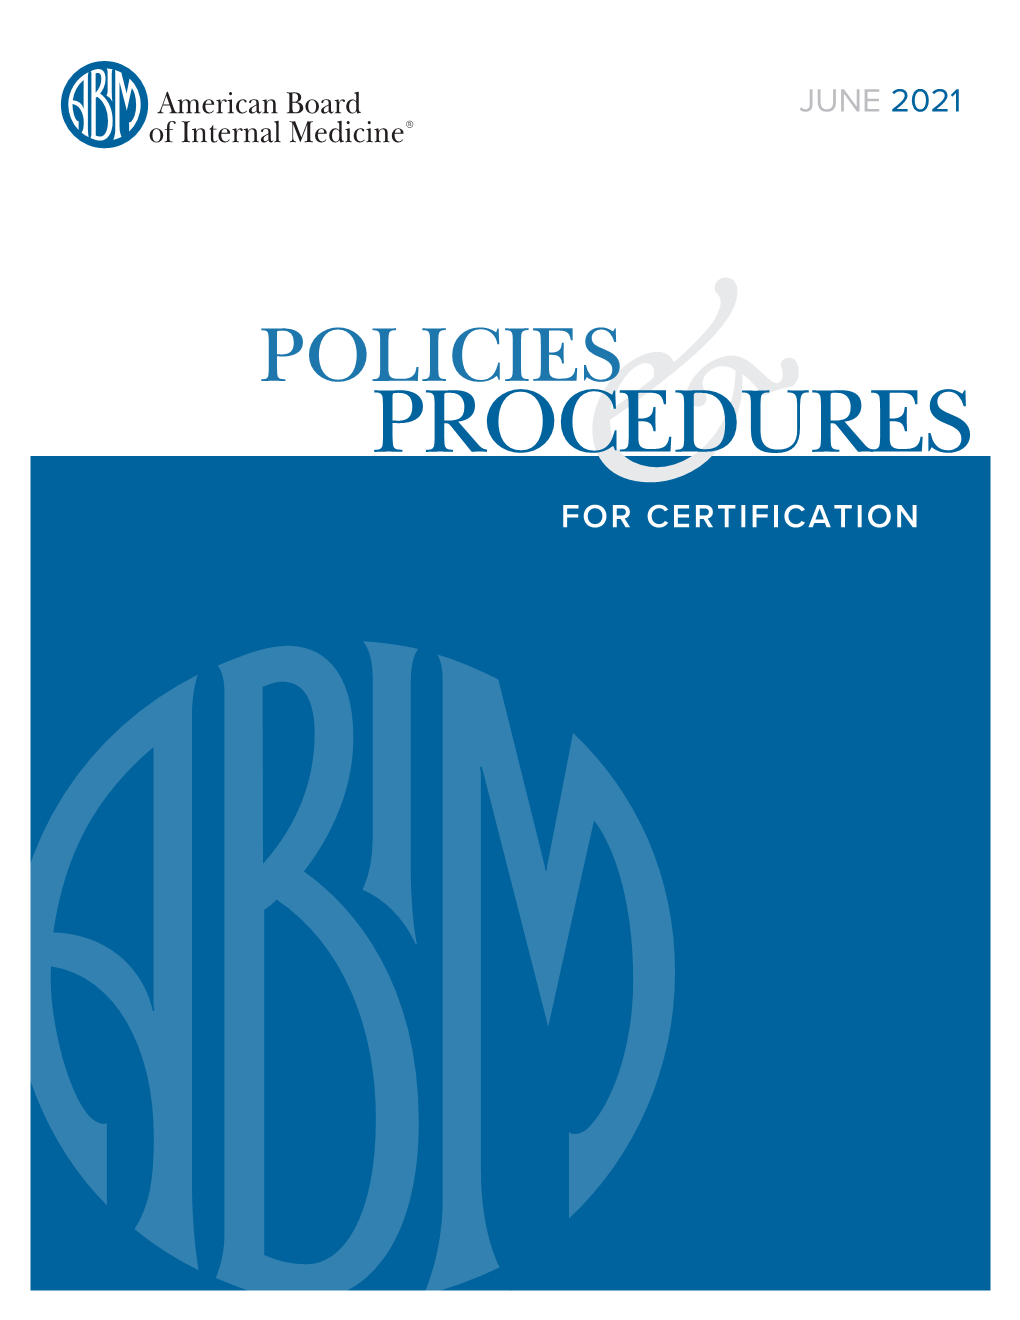 Policies and Procedures for Certification, June 2021